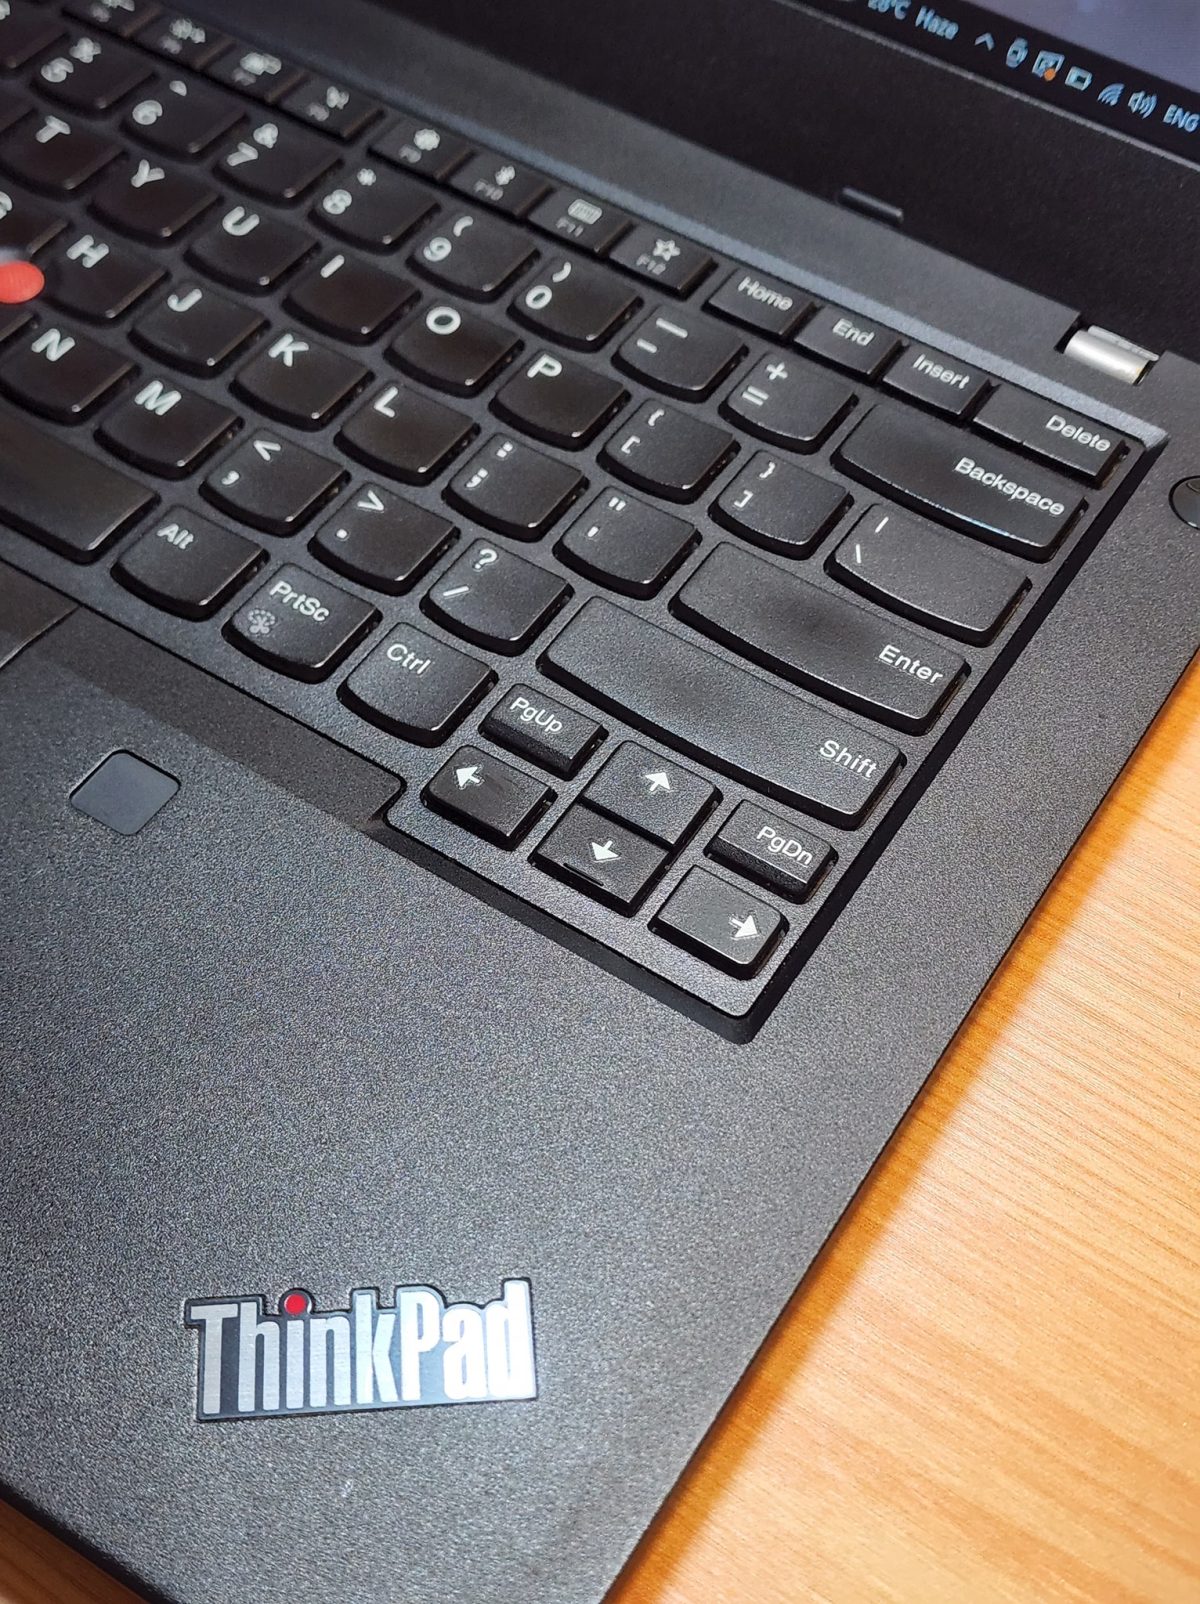 Lenovo Thinkpad L490 i5 8th gen Used